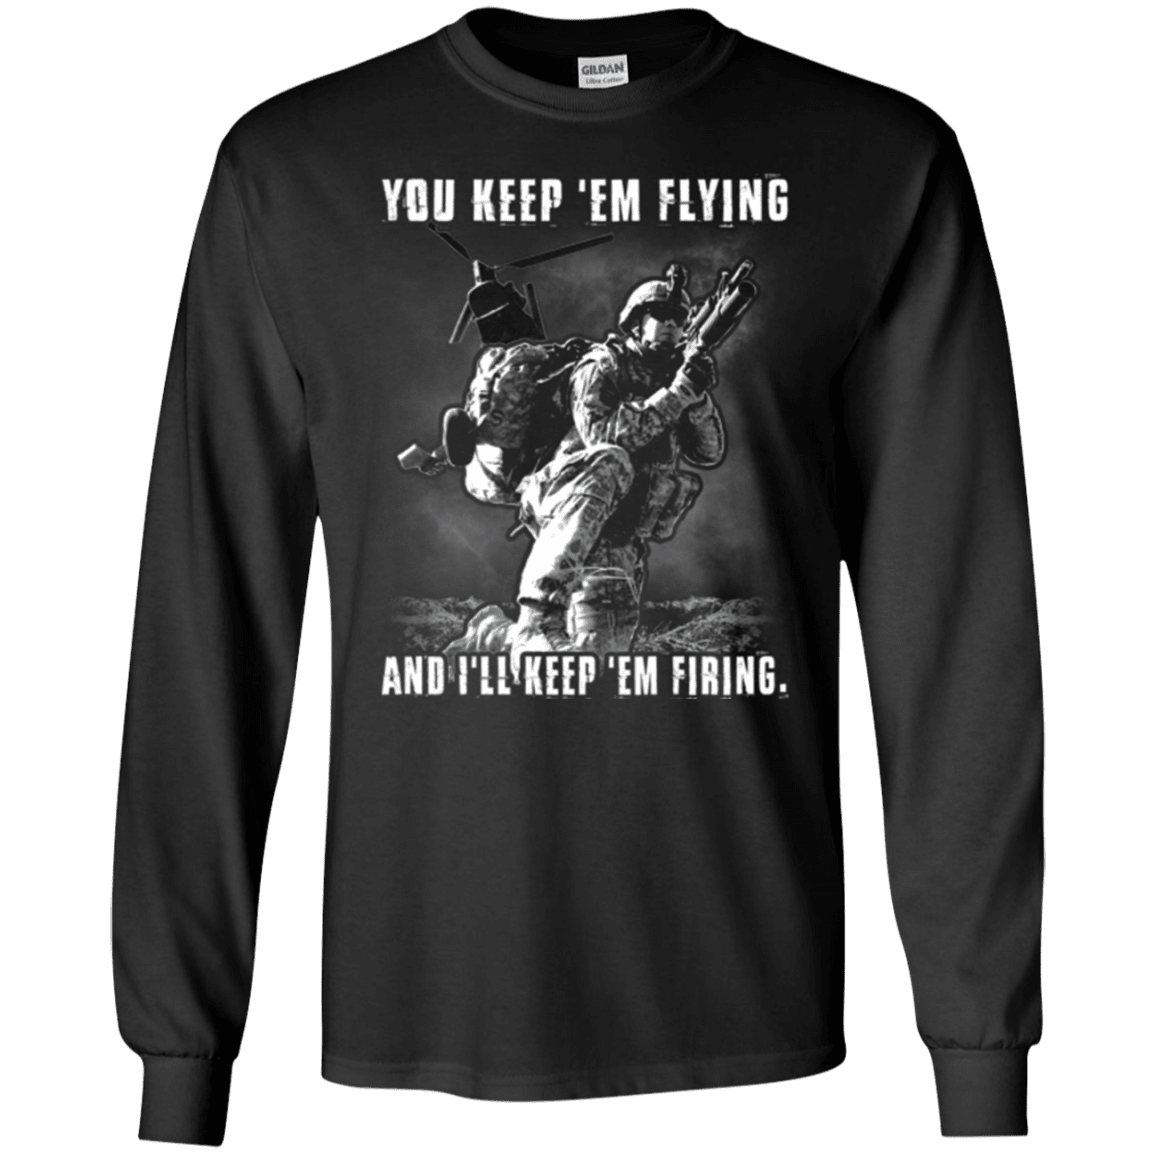 Military T-Shirt "You Kept 'Em Flying And I'll Kept 'Em Firing"-TShirt-General-Veterans Nation